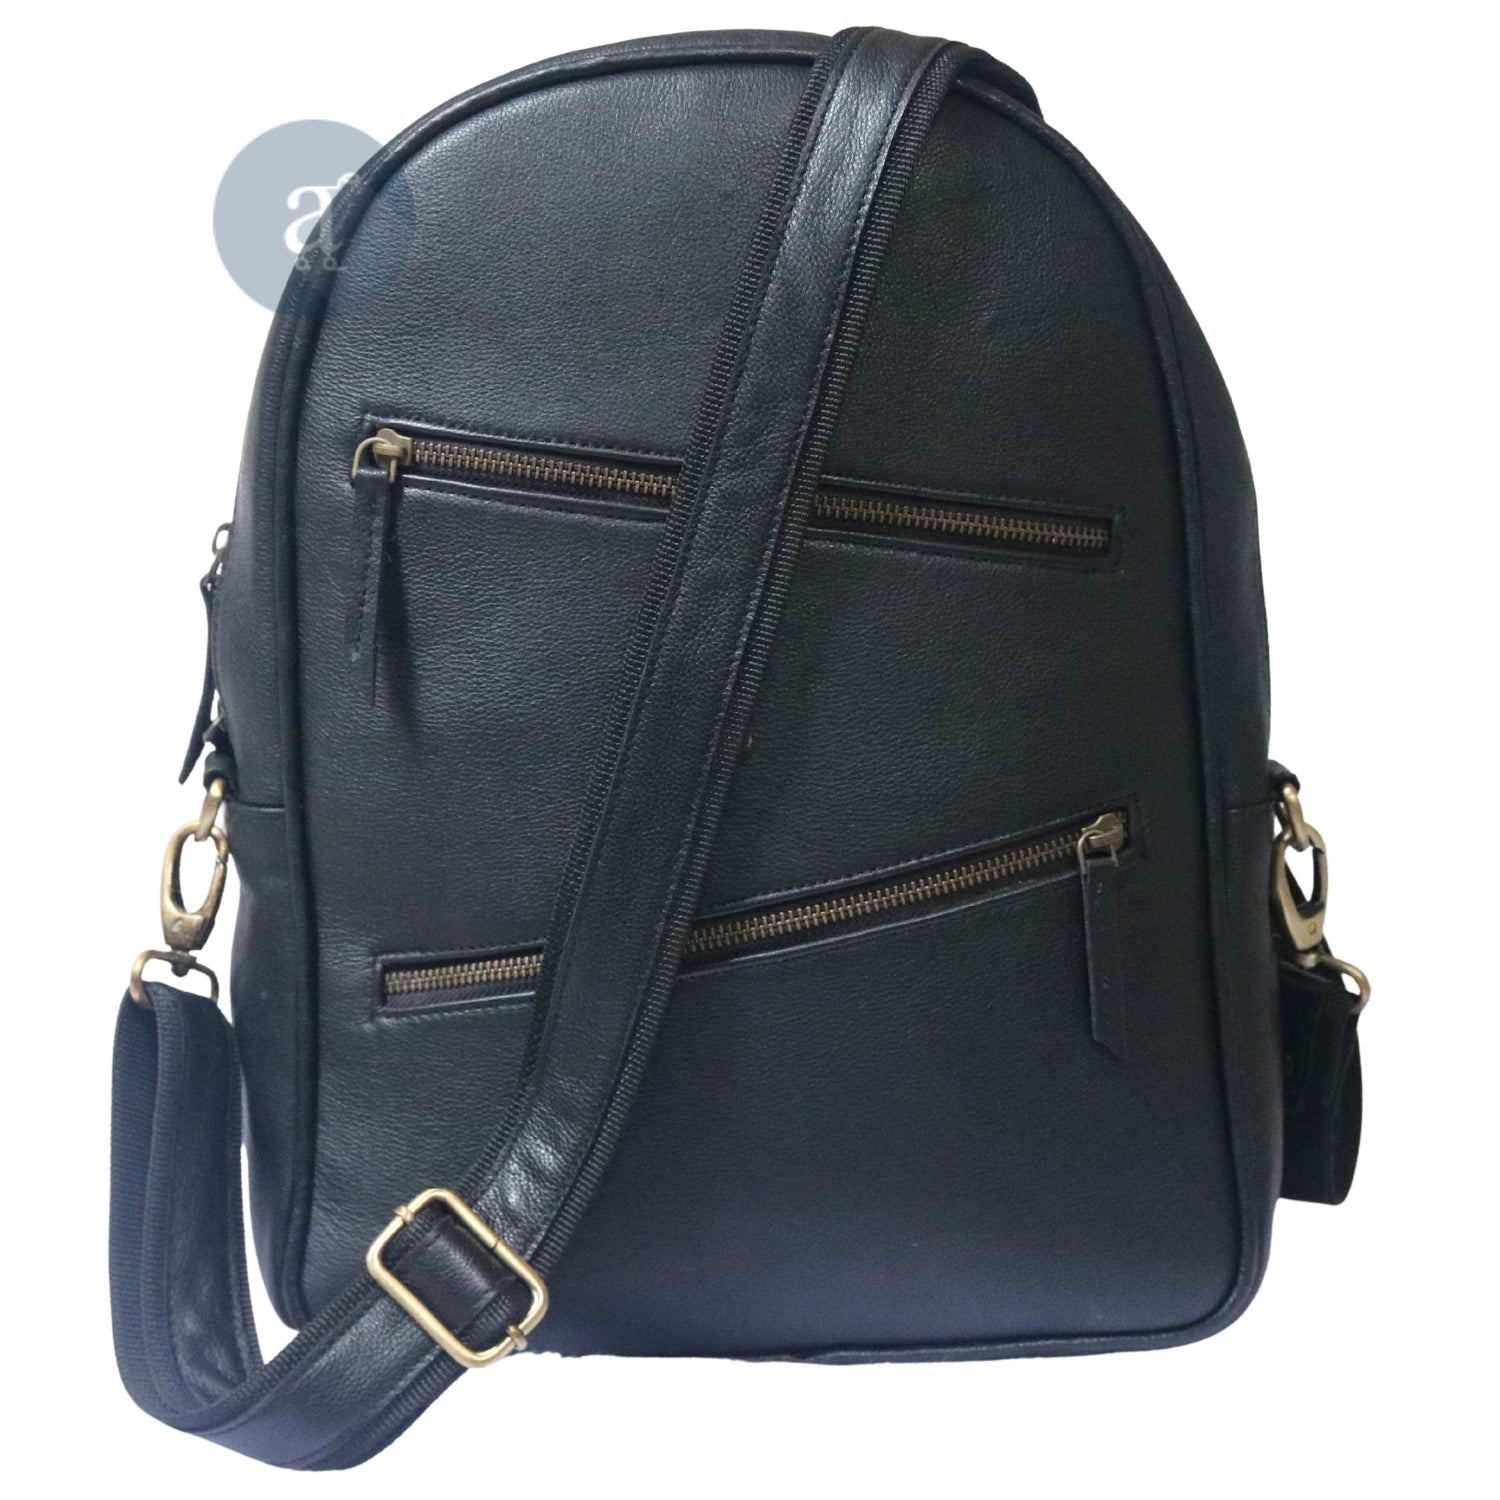 Women's Black Leather Backpack with Shoulder Strap